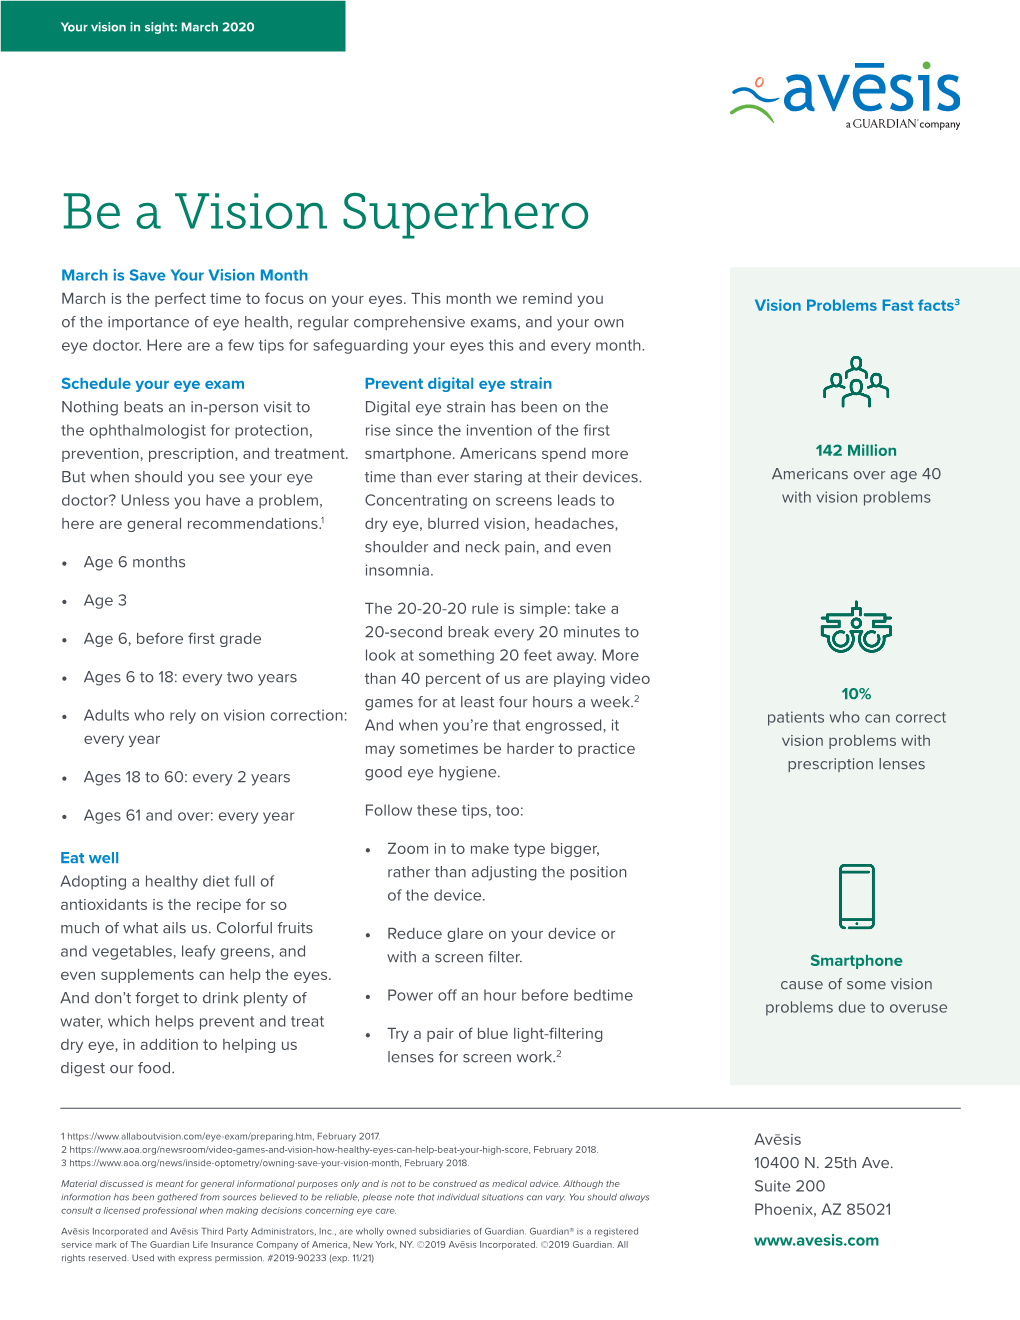 Be a Vision Superhero